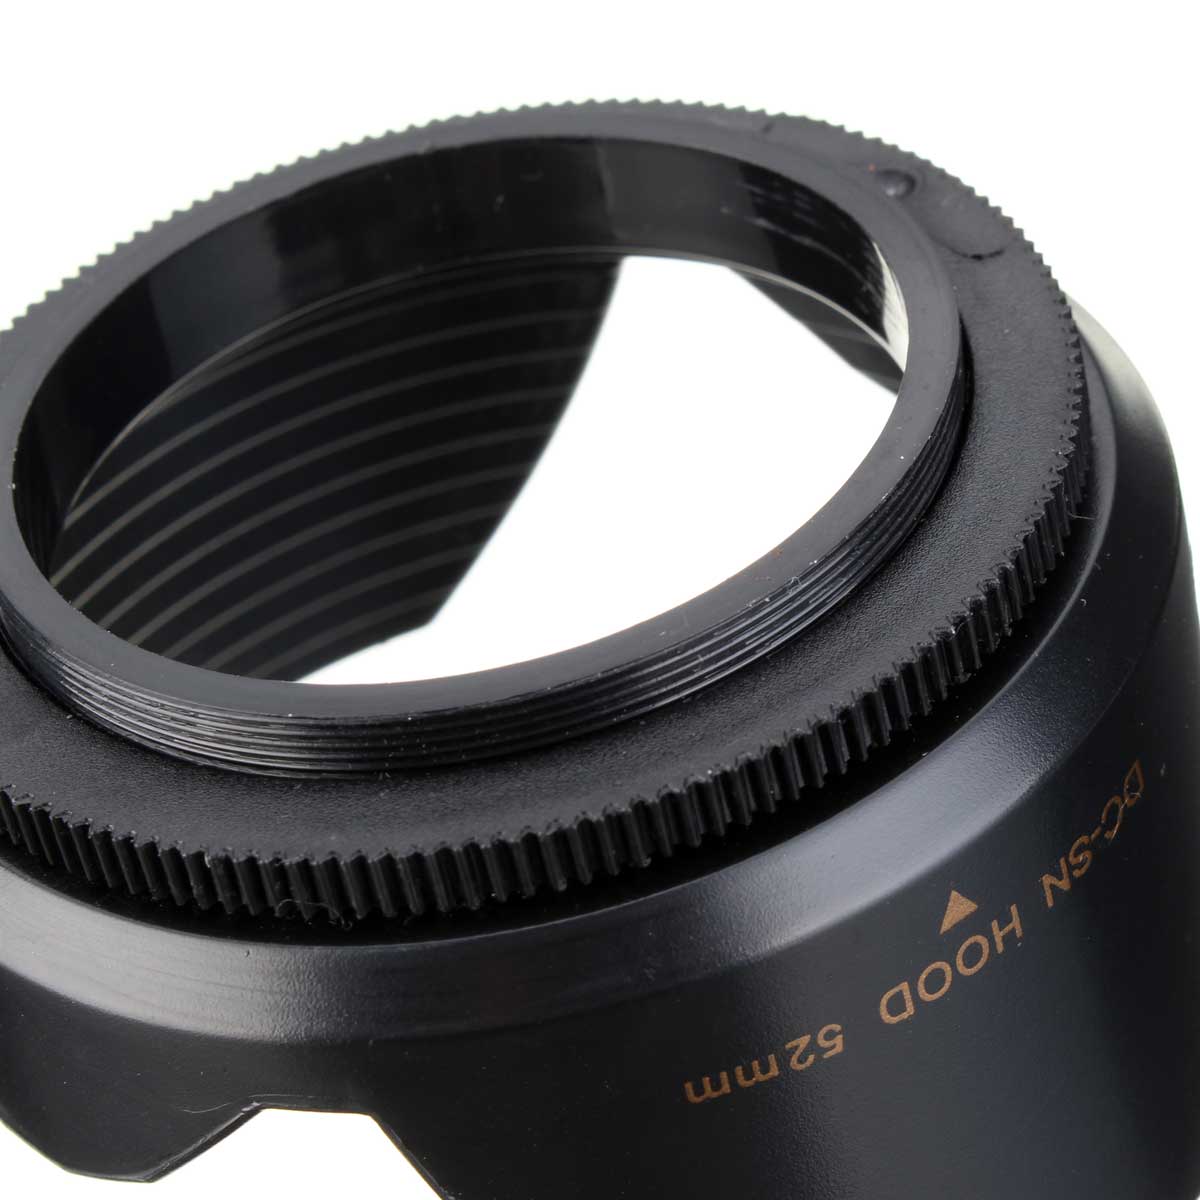 52mm Flower Lens Hood For Nikon D5200 D5100 D3100 D3200 D3000